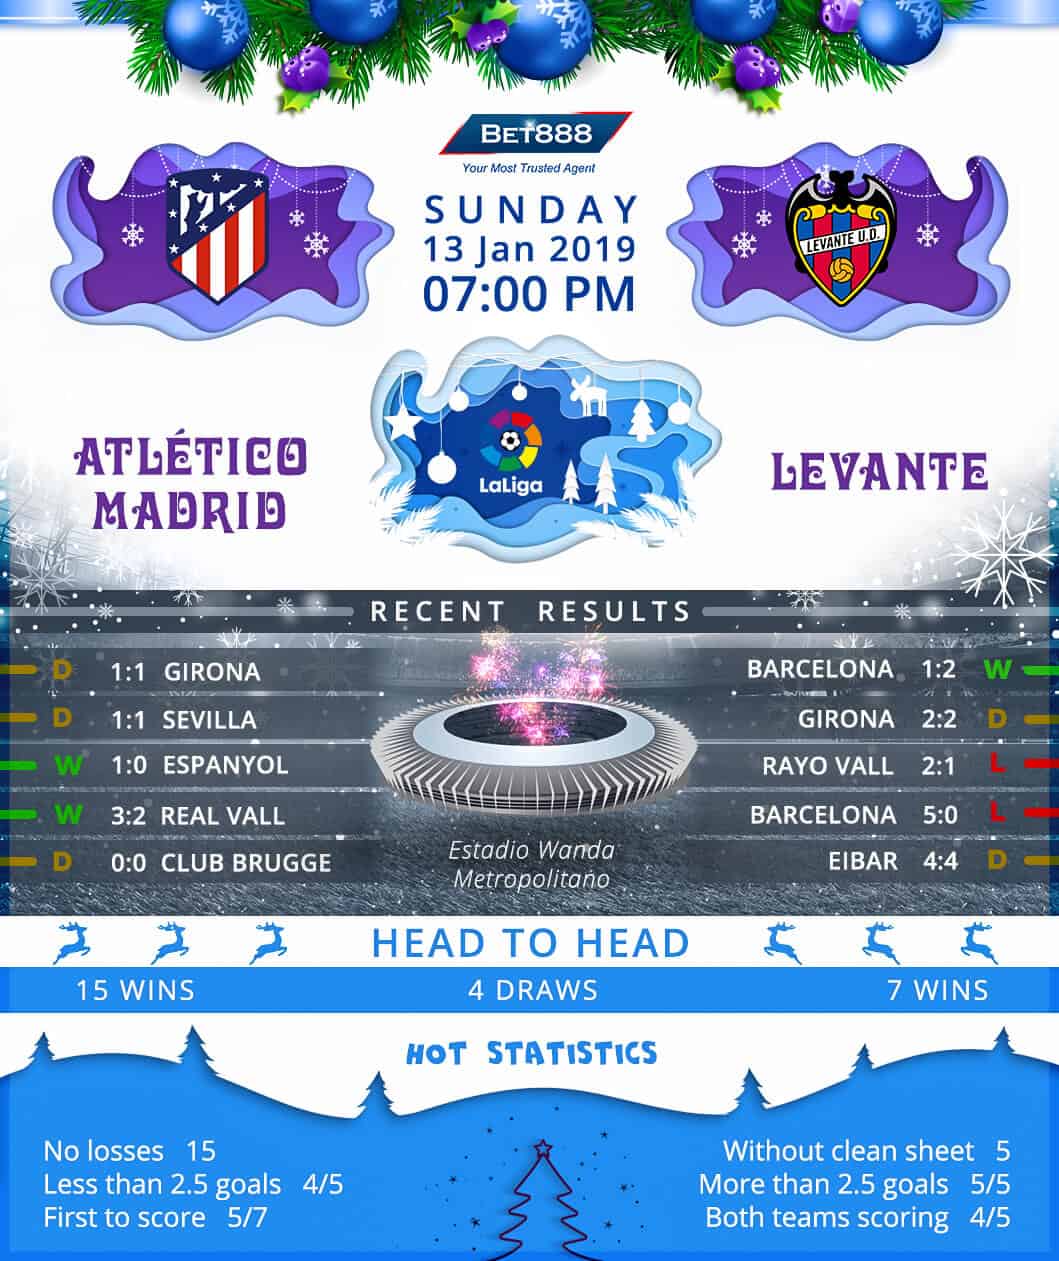 Atletico Madrid vs Levante 13/01/19